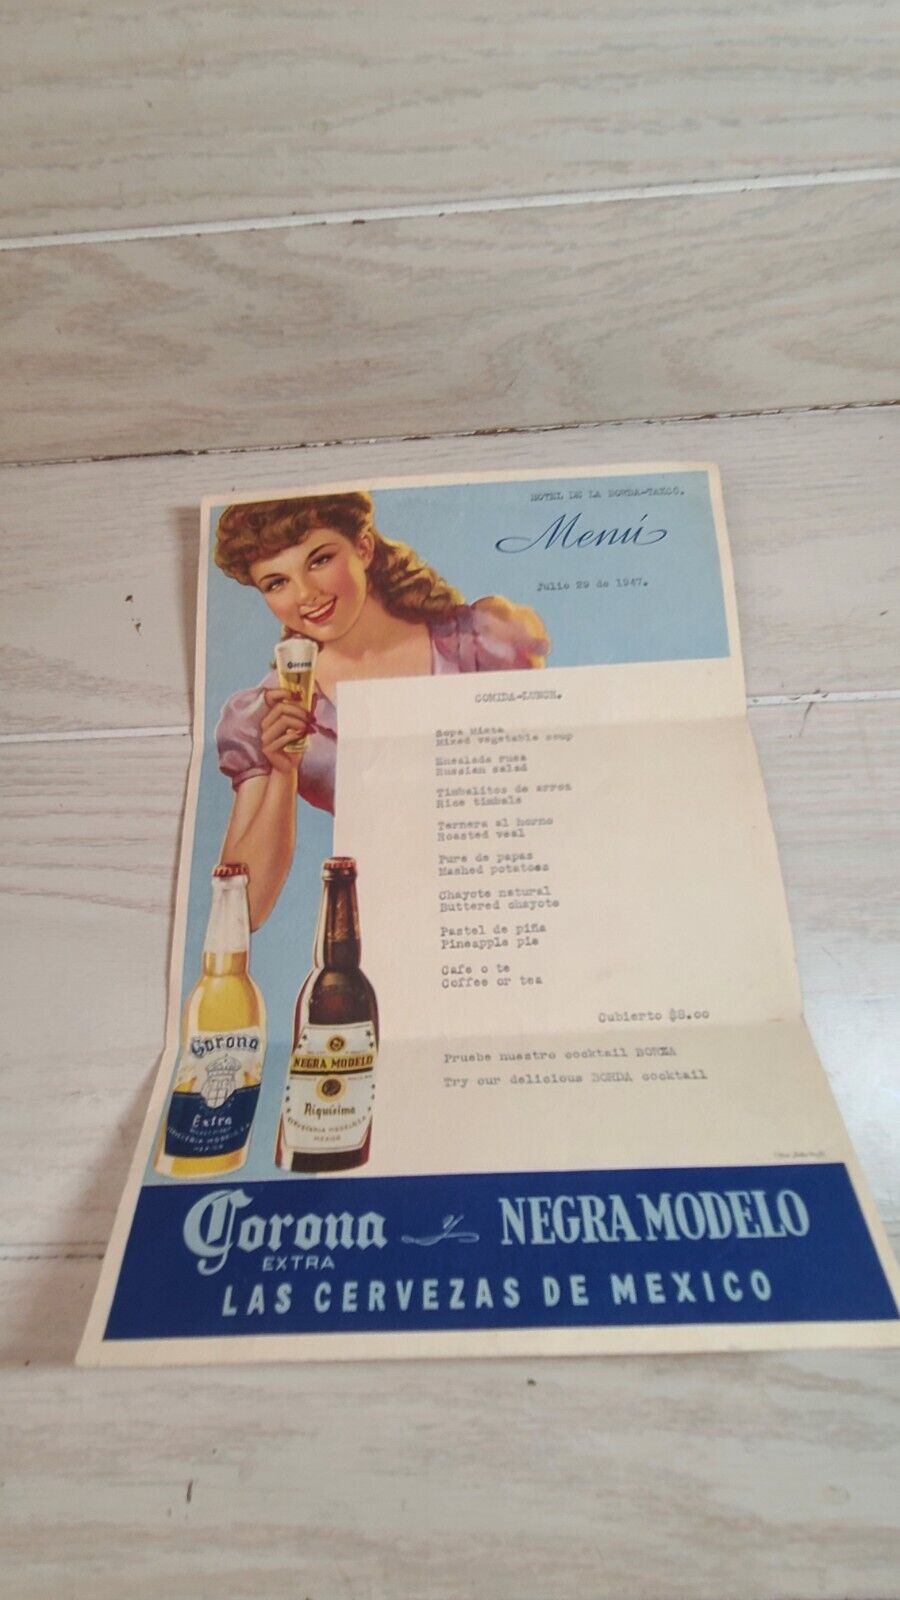 1947 Hotel De La Borda Taxco Menu Pin Up Girl Corona Negra Modelo Advertisement 